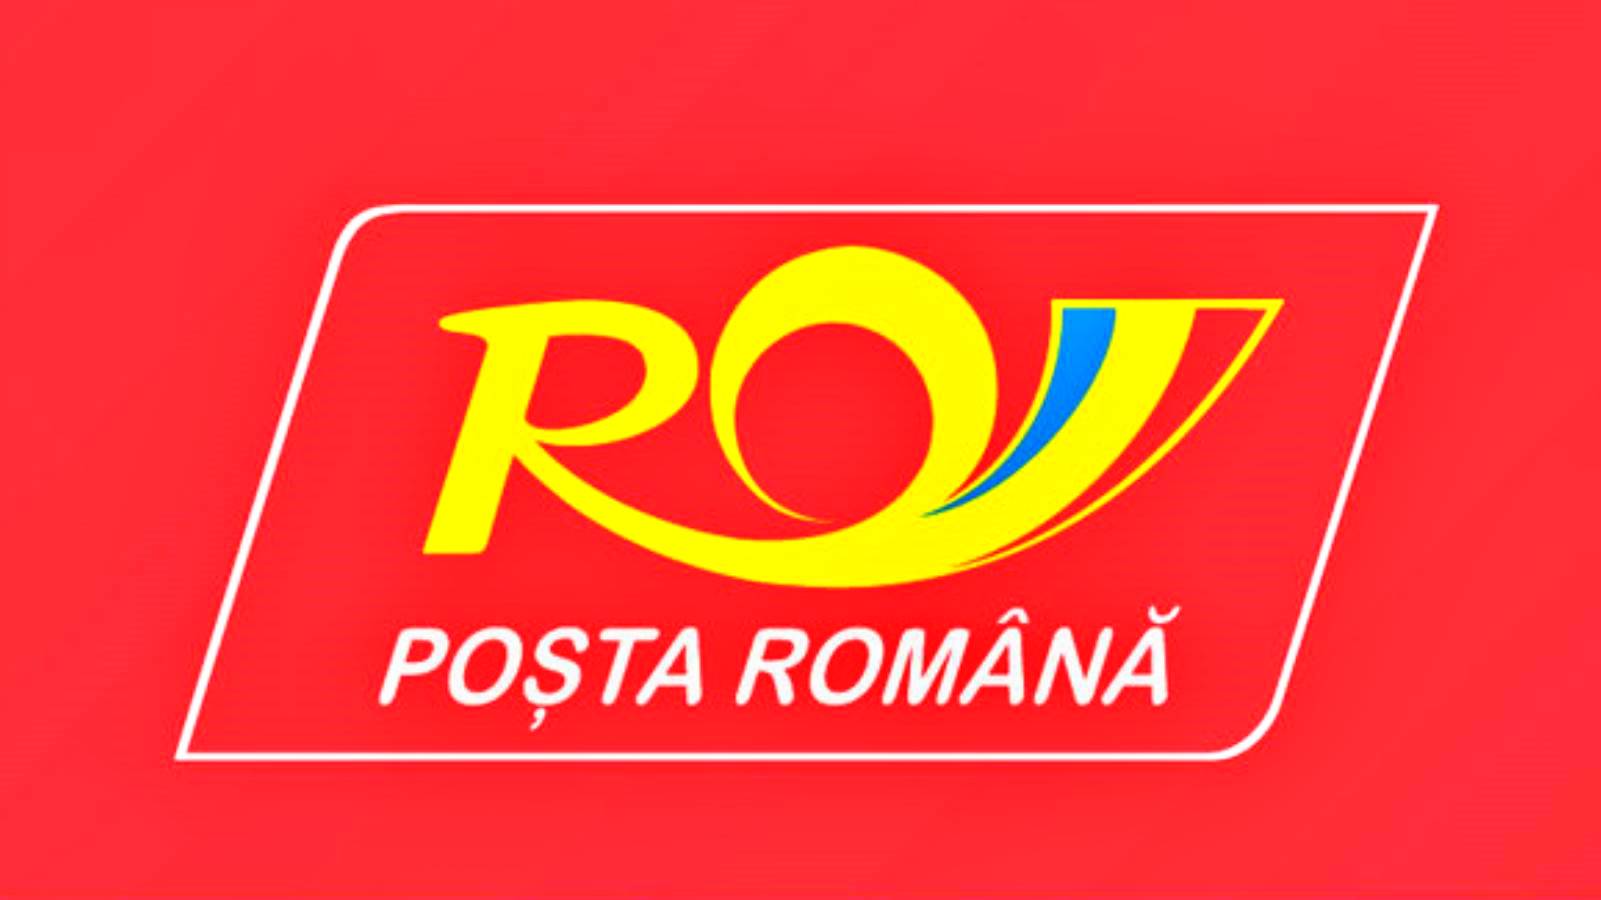 Roemeense Post UltraPost-service